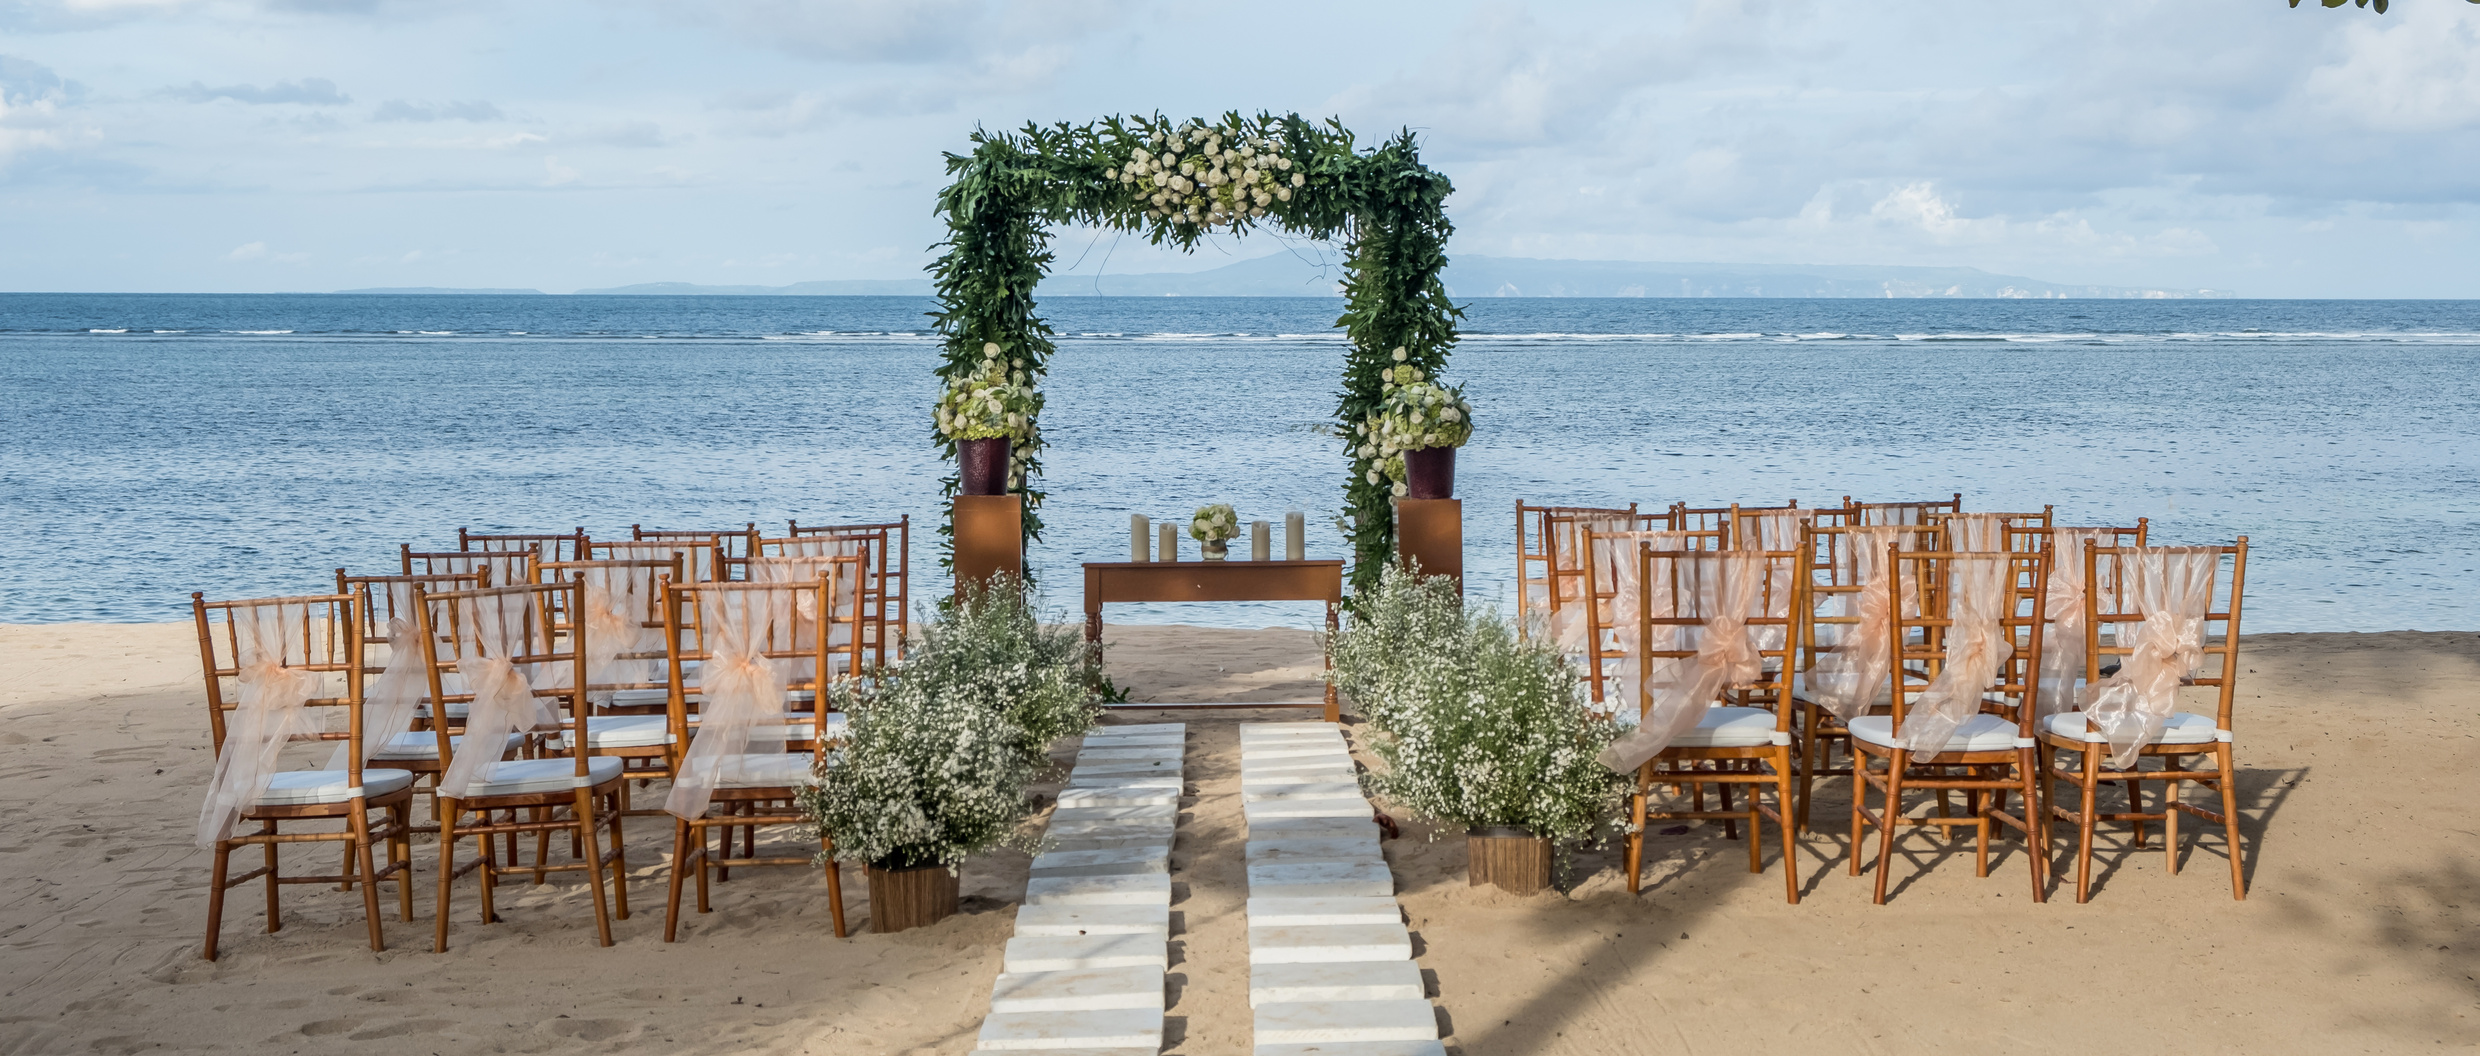 Wedding on the beach, Tropical settings for a wedding on a beach - Bali island. Exotic destination wedding concept